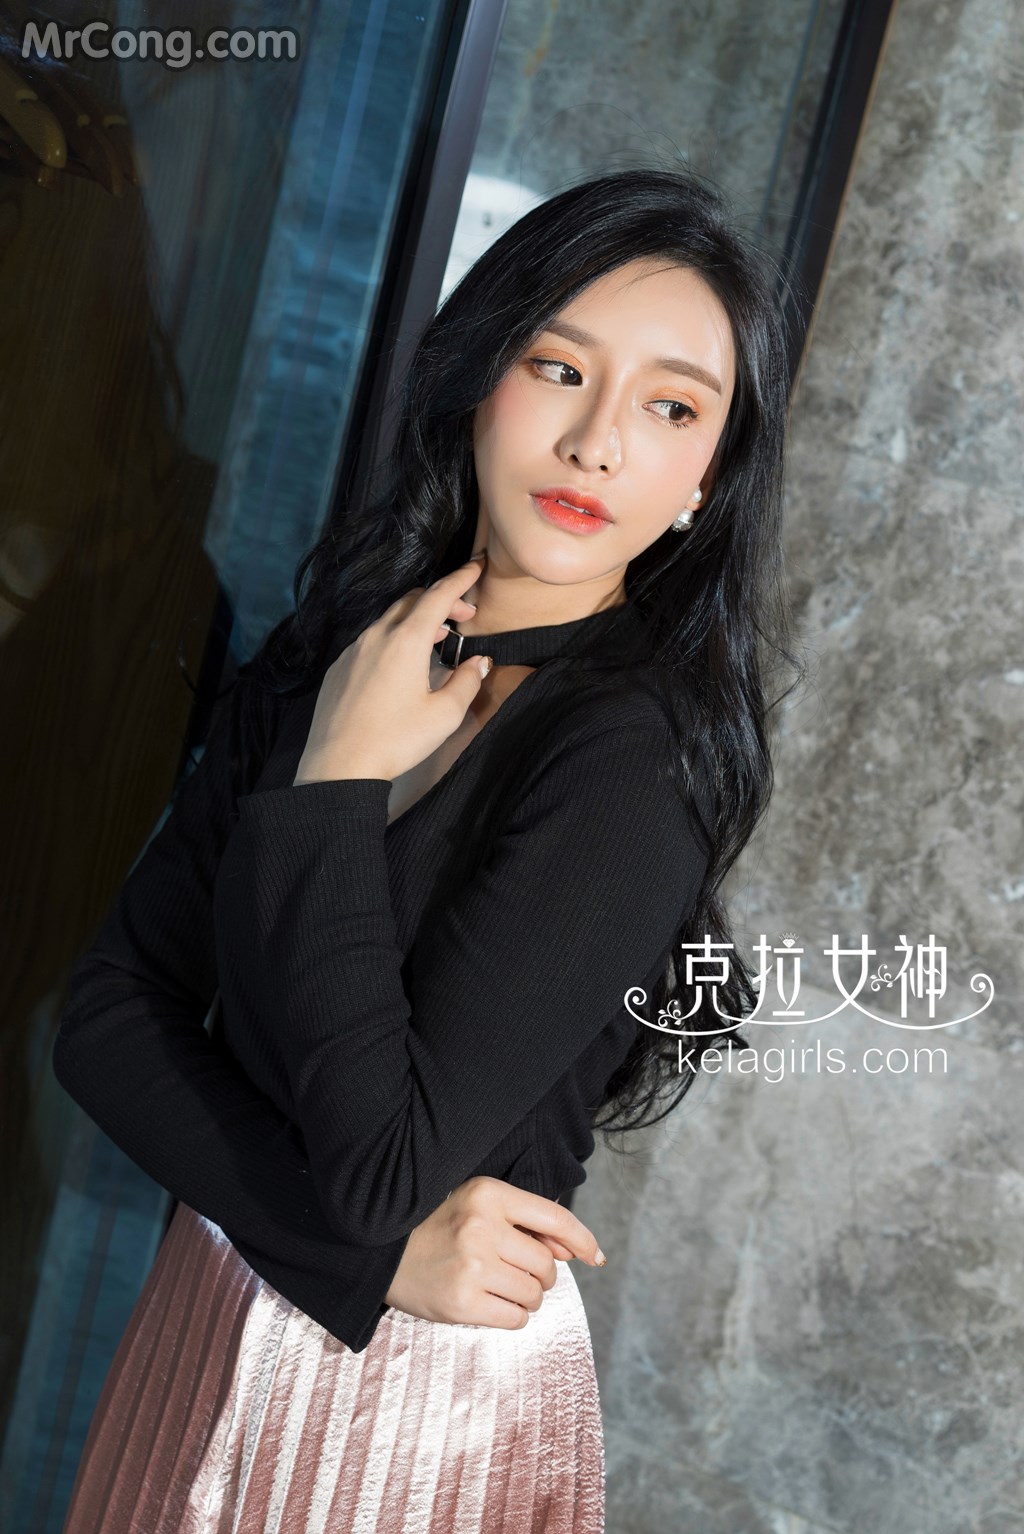 KelaGirls 2017-02-19: Model Xiao Xi (小 西) (34 photos) photo 1-2